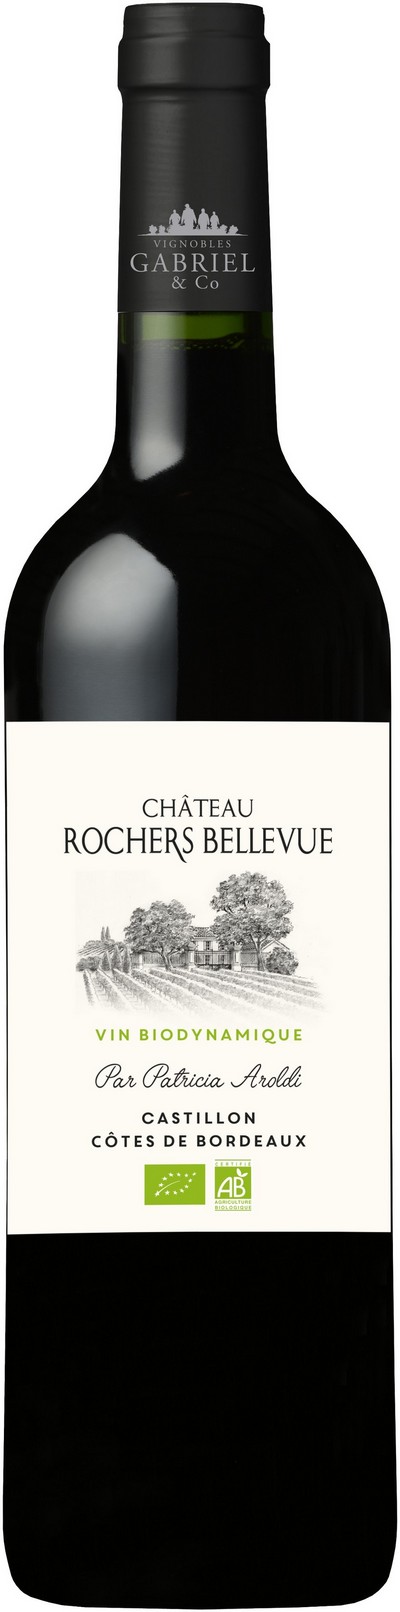 chateau-rochers-bellevue-vin-biodynamique-2019